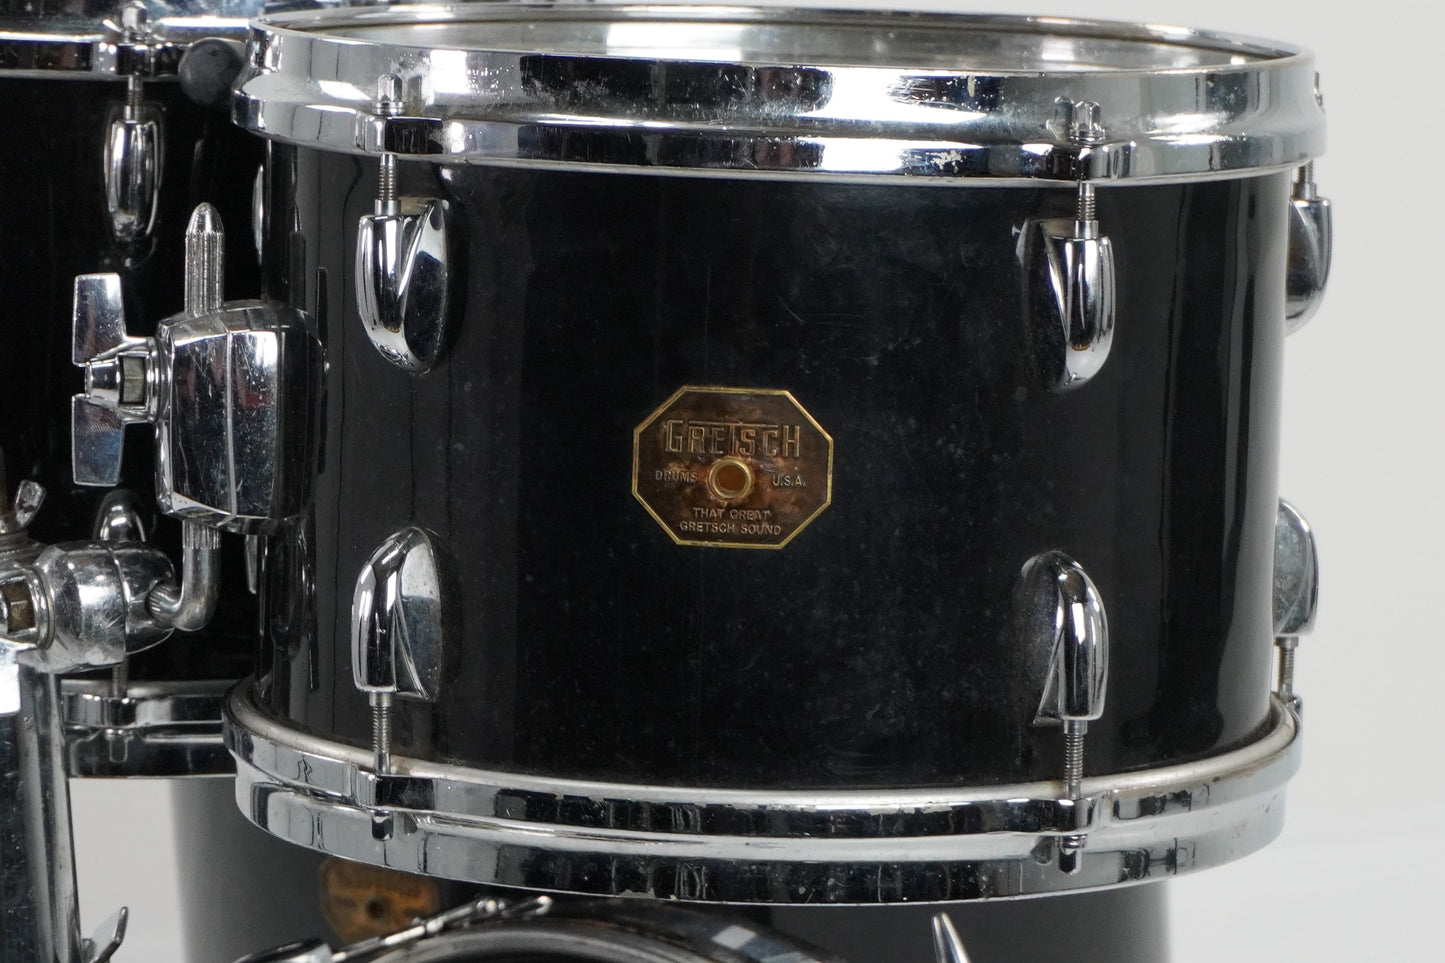 Gretsch USA 1969-1977 Drum kit 20x14 12x8 13x9 16x16